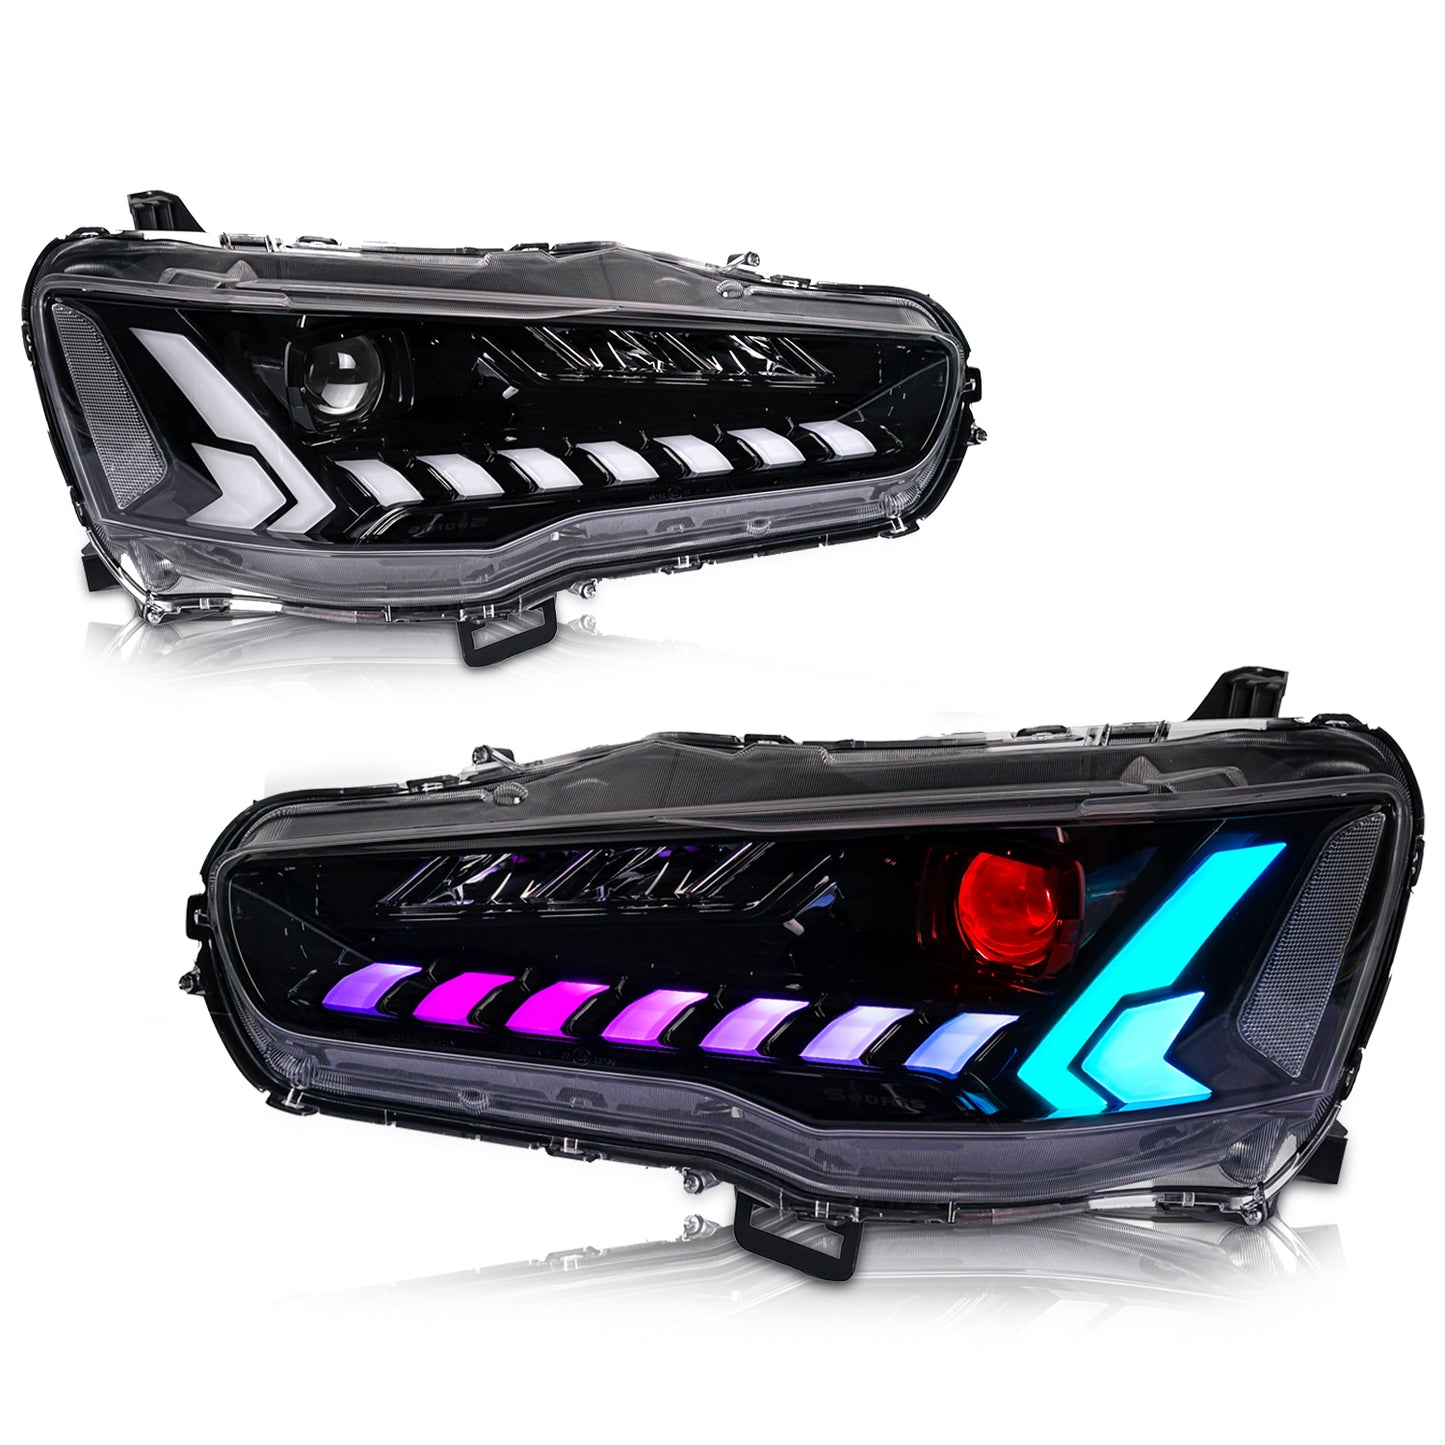 Full LED Headlights Assembly For Mitsubishi Lancer & EVO X 2008-2023,RGB DRL